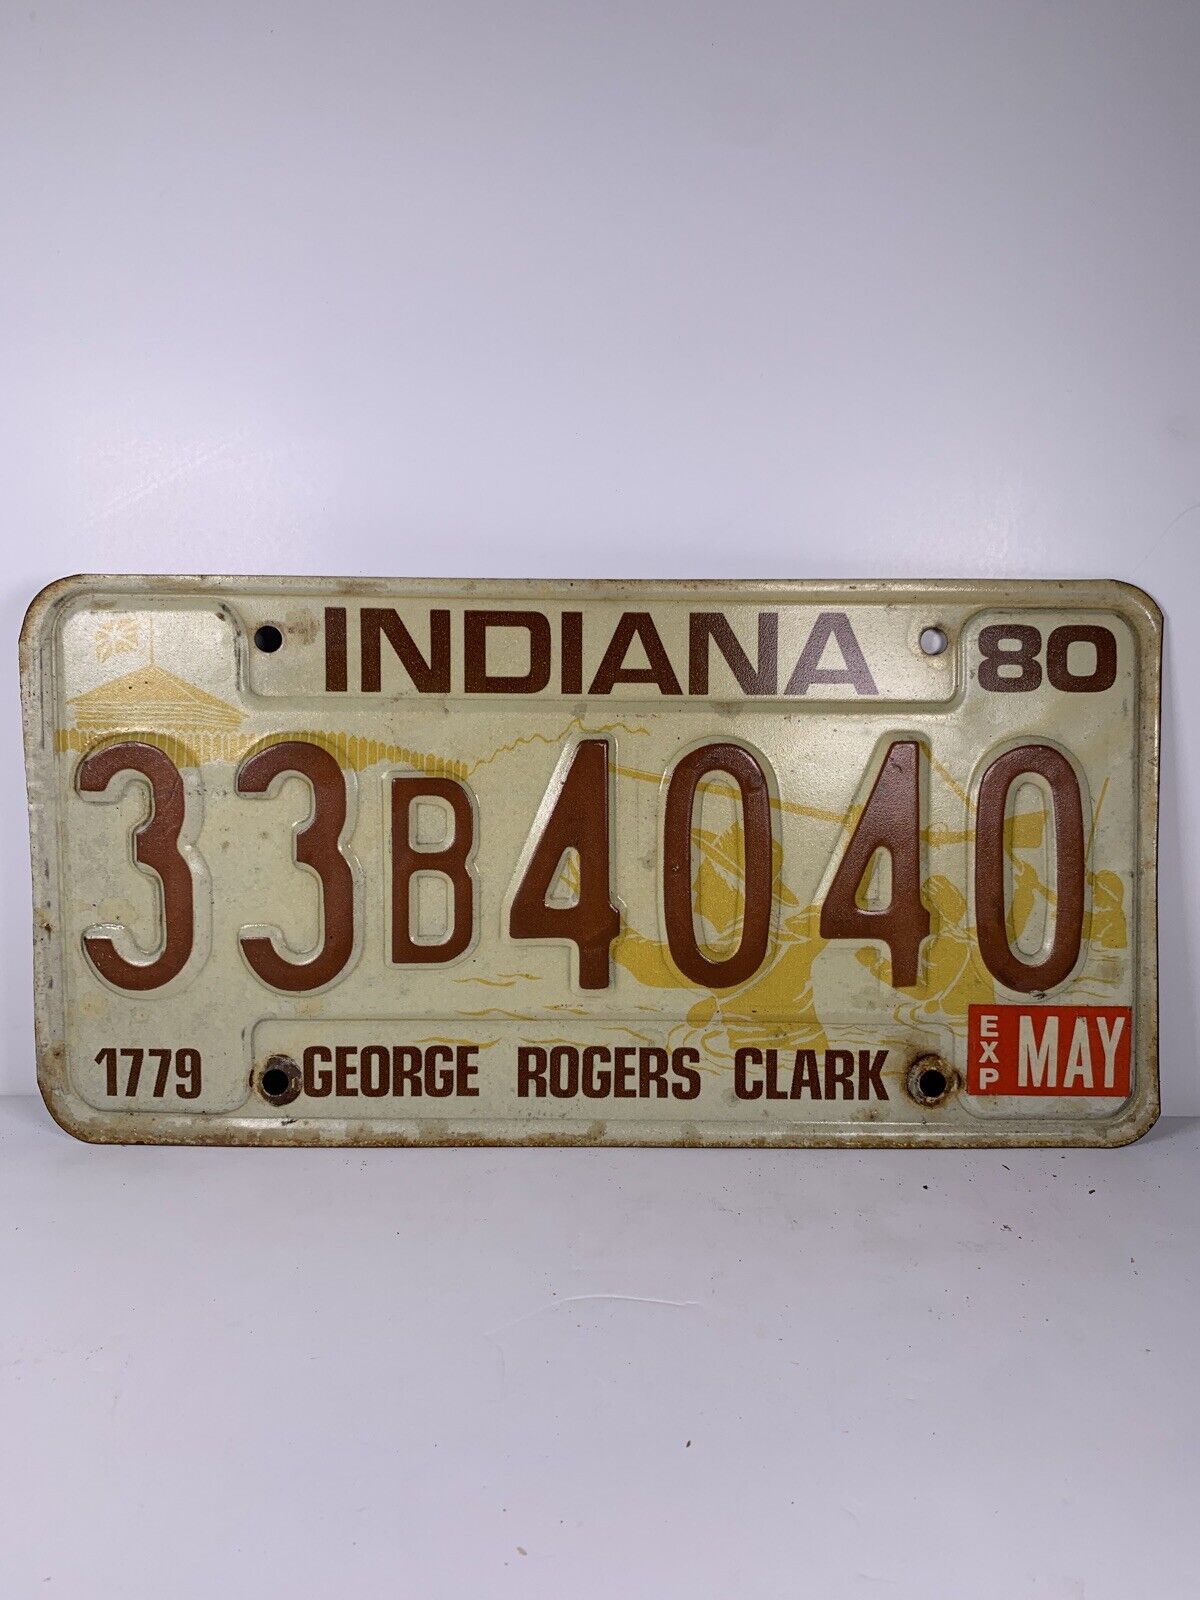 Vintage Original Indiana 1980 Year License Plate 33 B 4040 George Rogers Clark